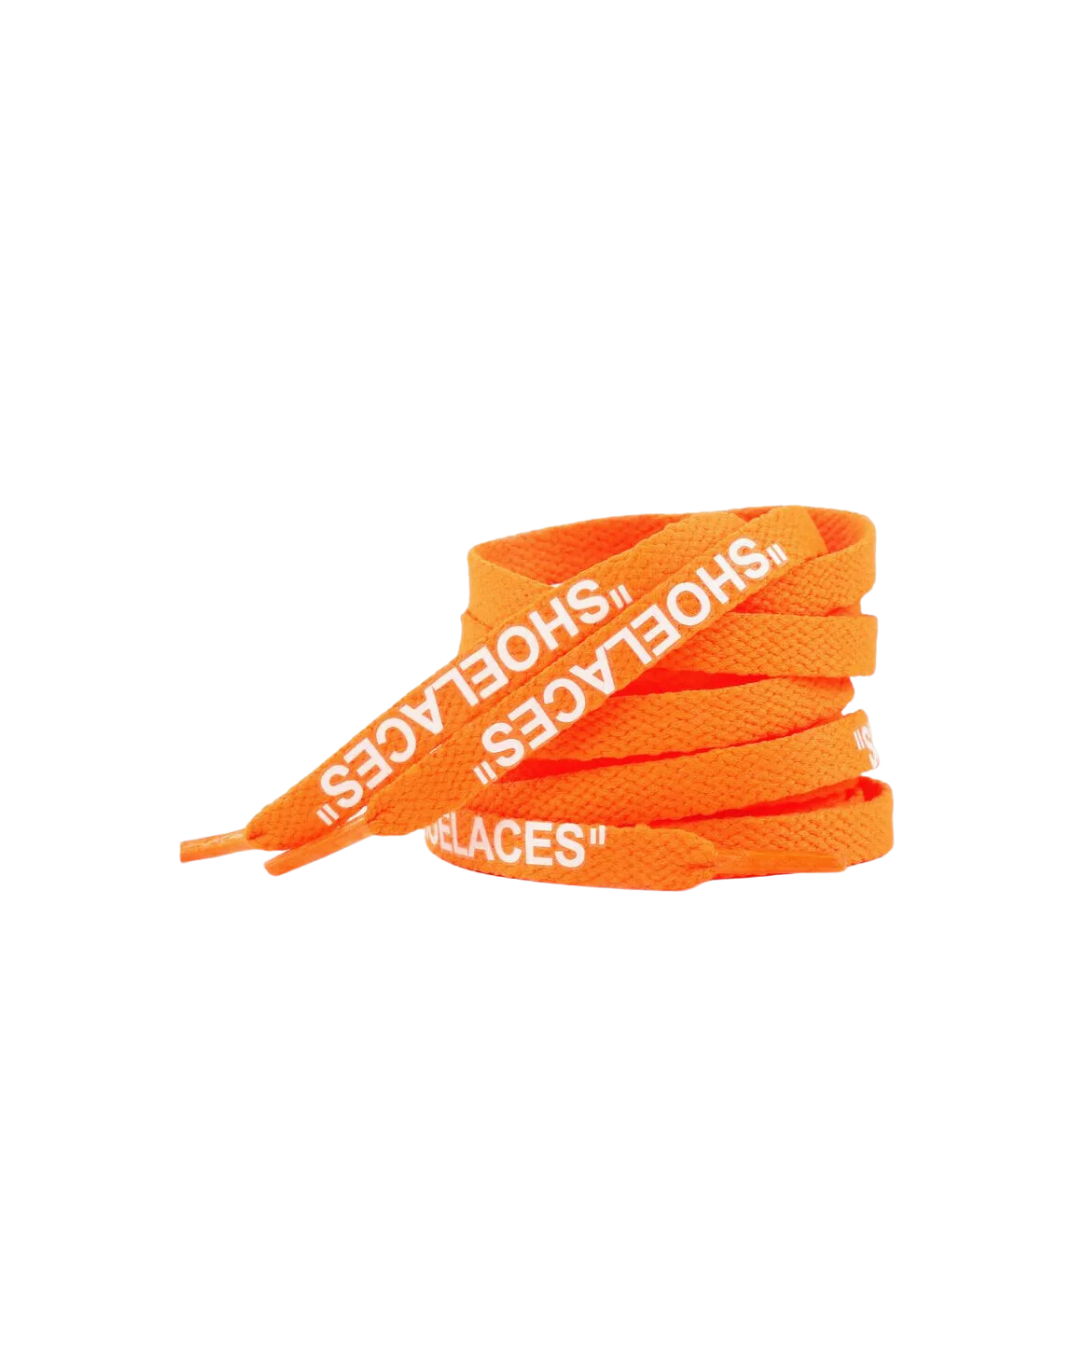 "SHOELACES" Laces Orange/White